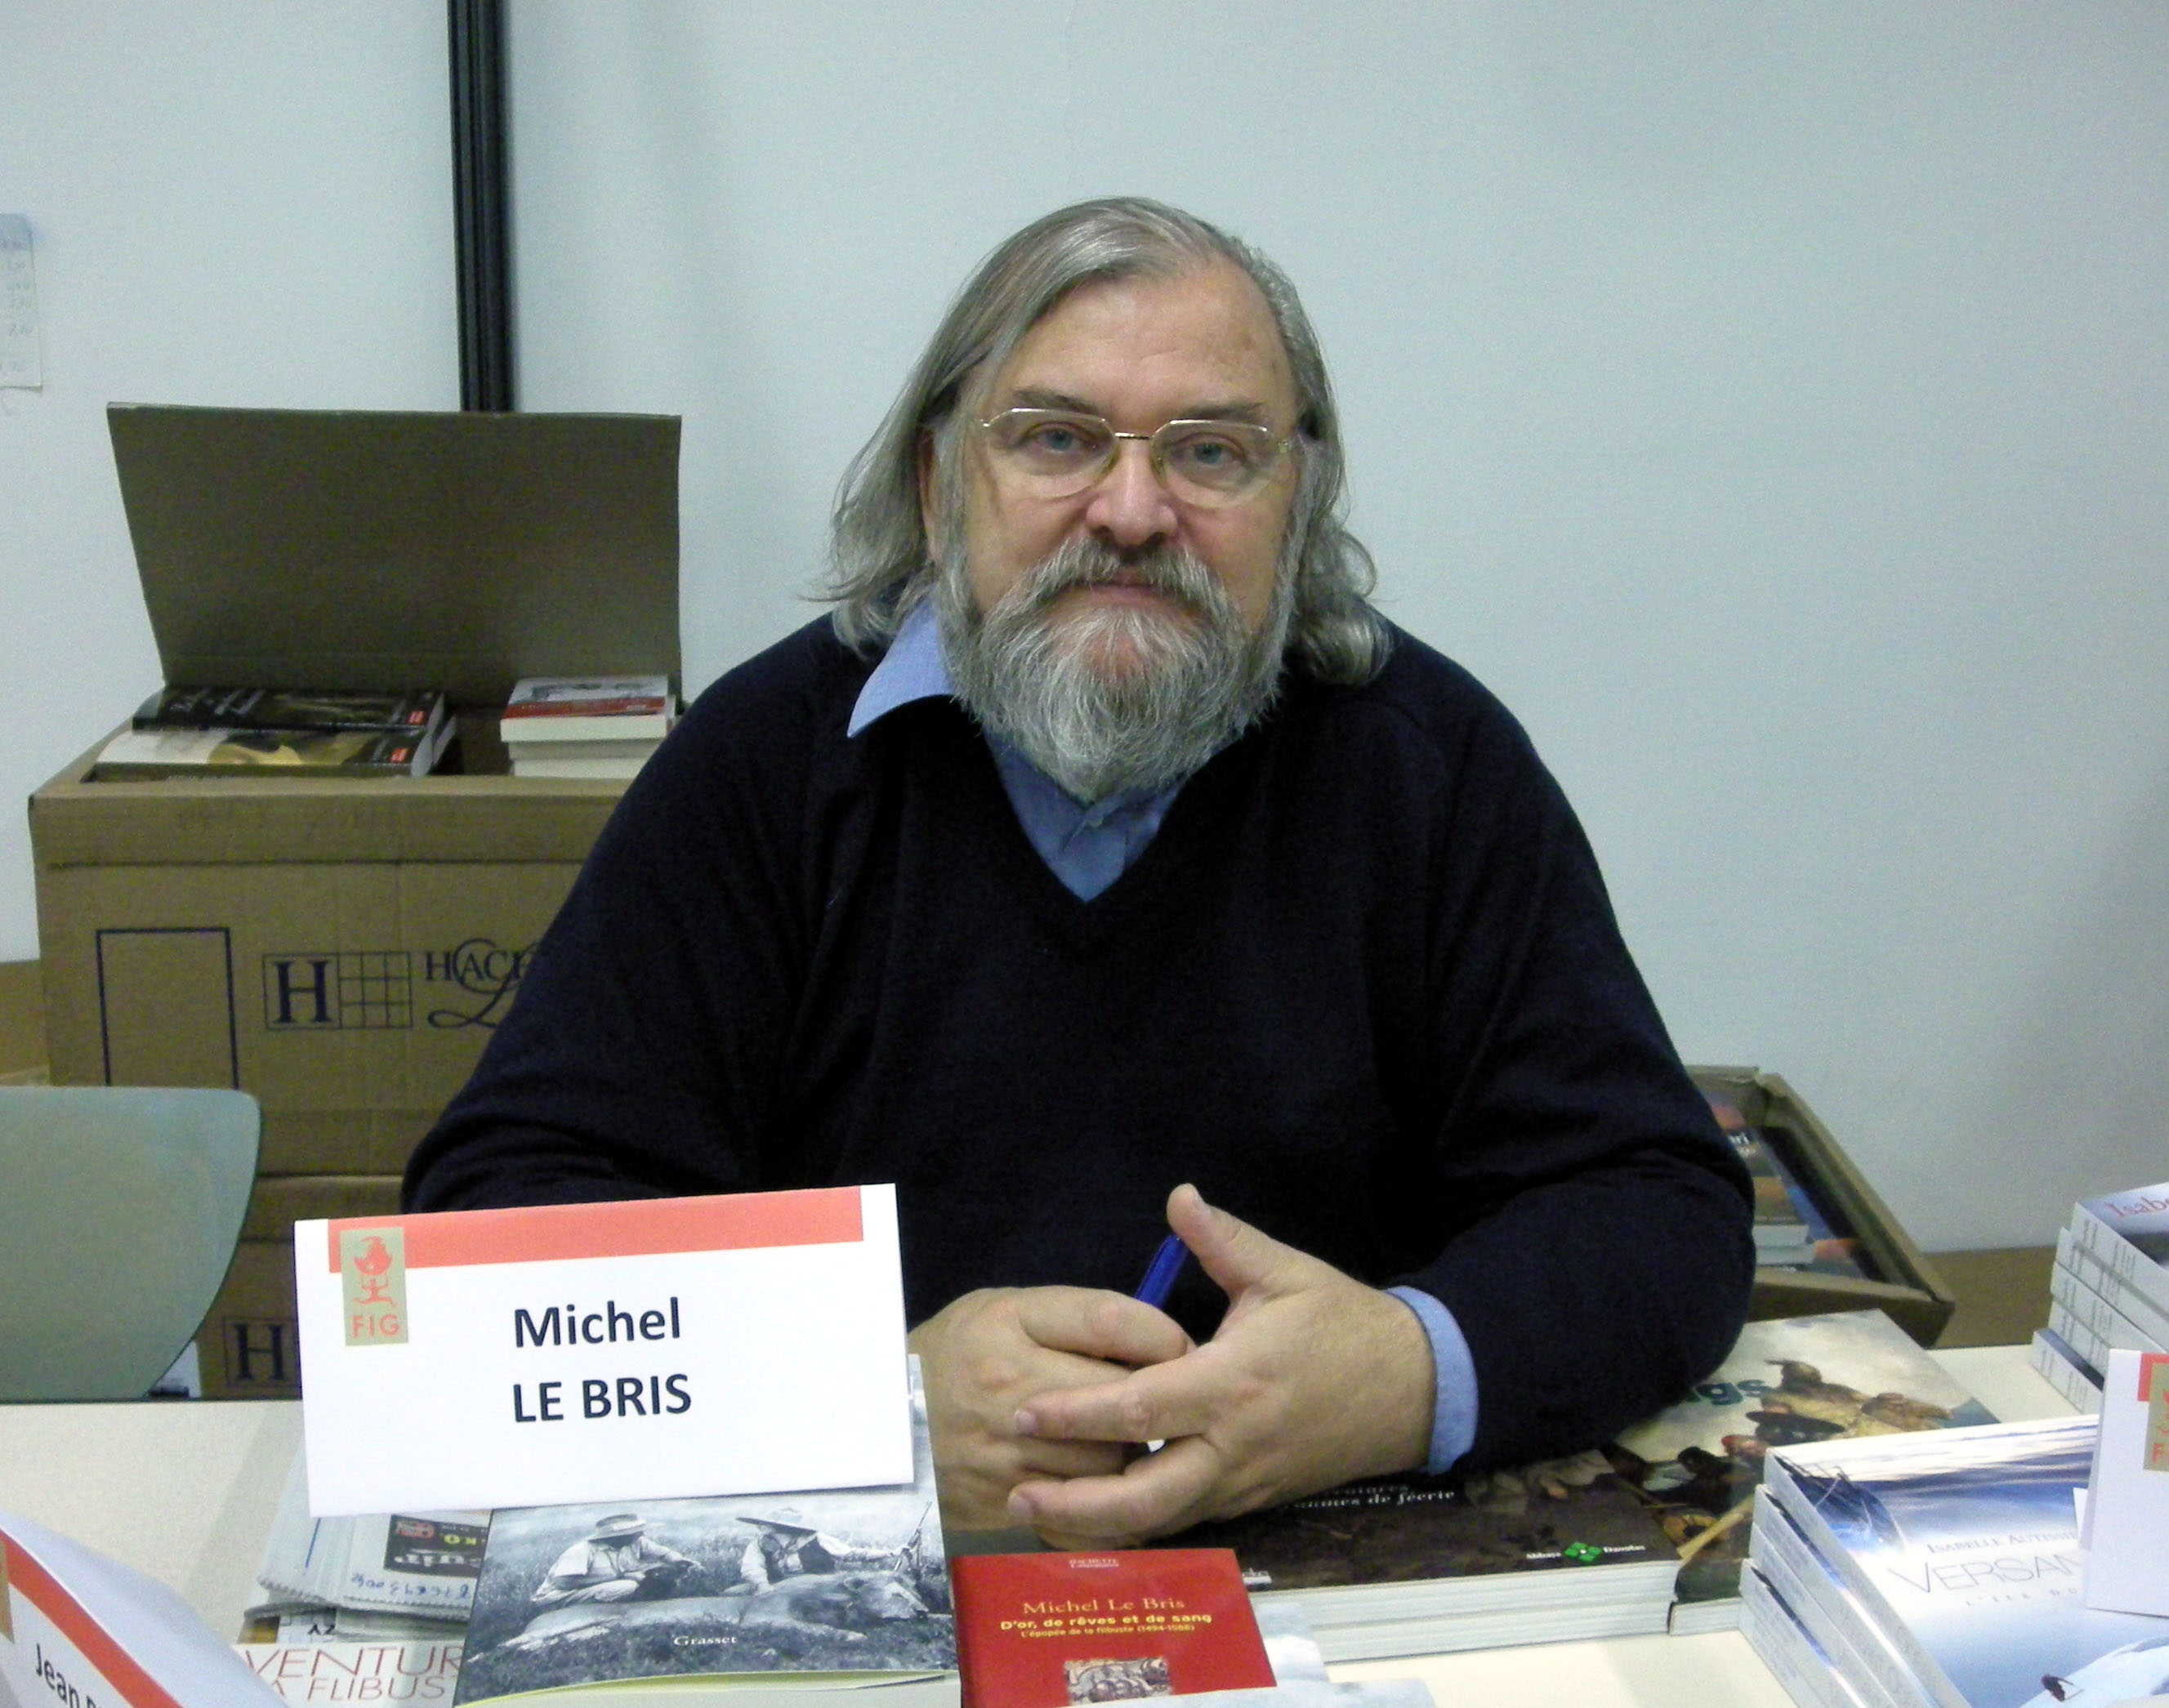 Michel Le Bris in 2008